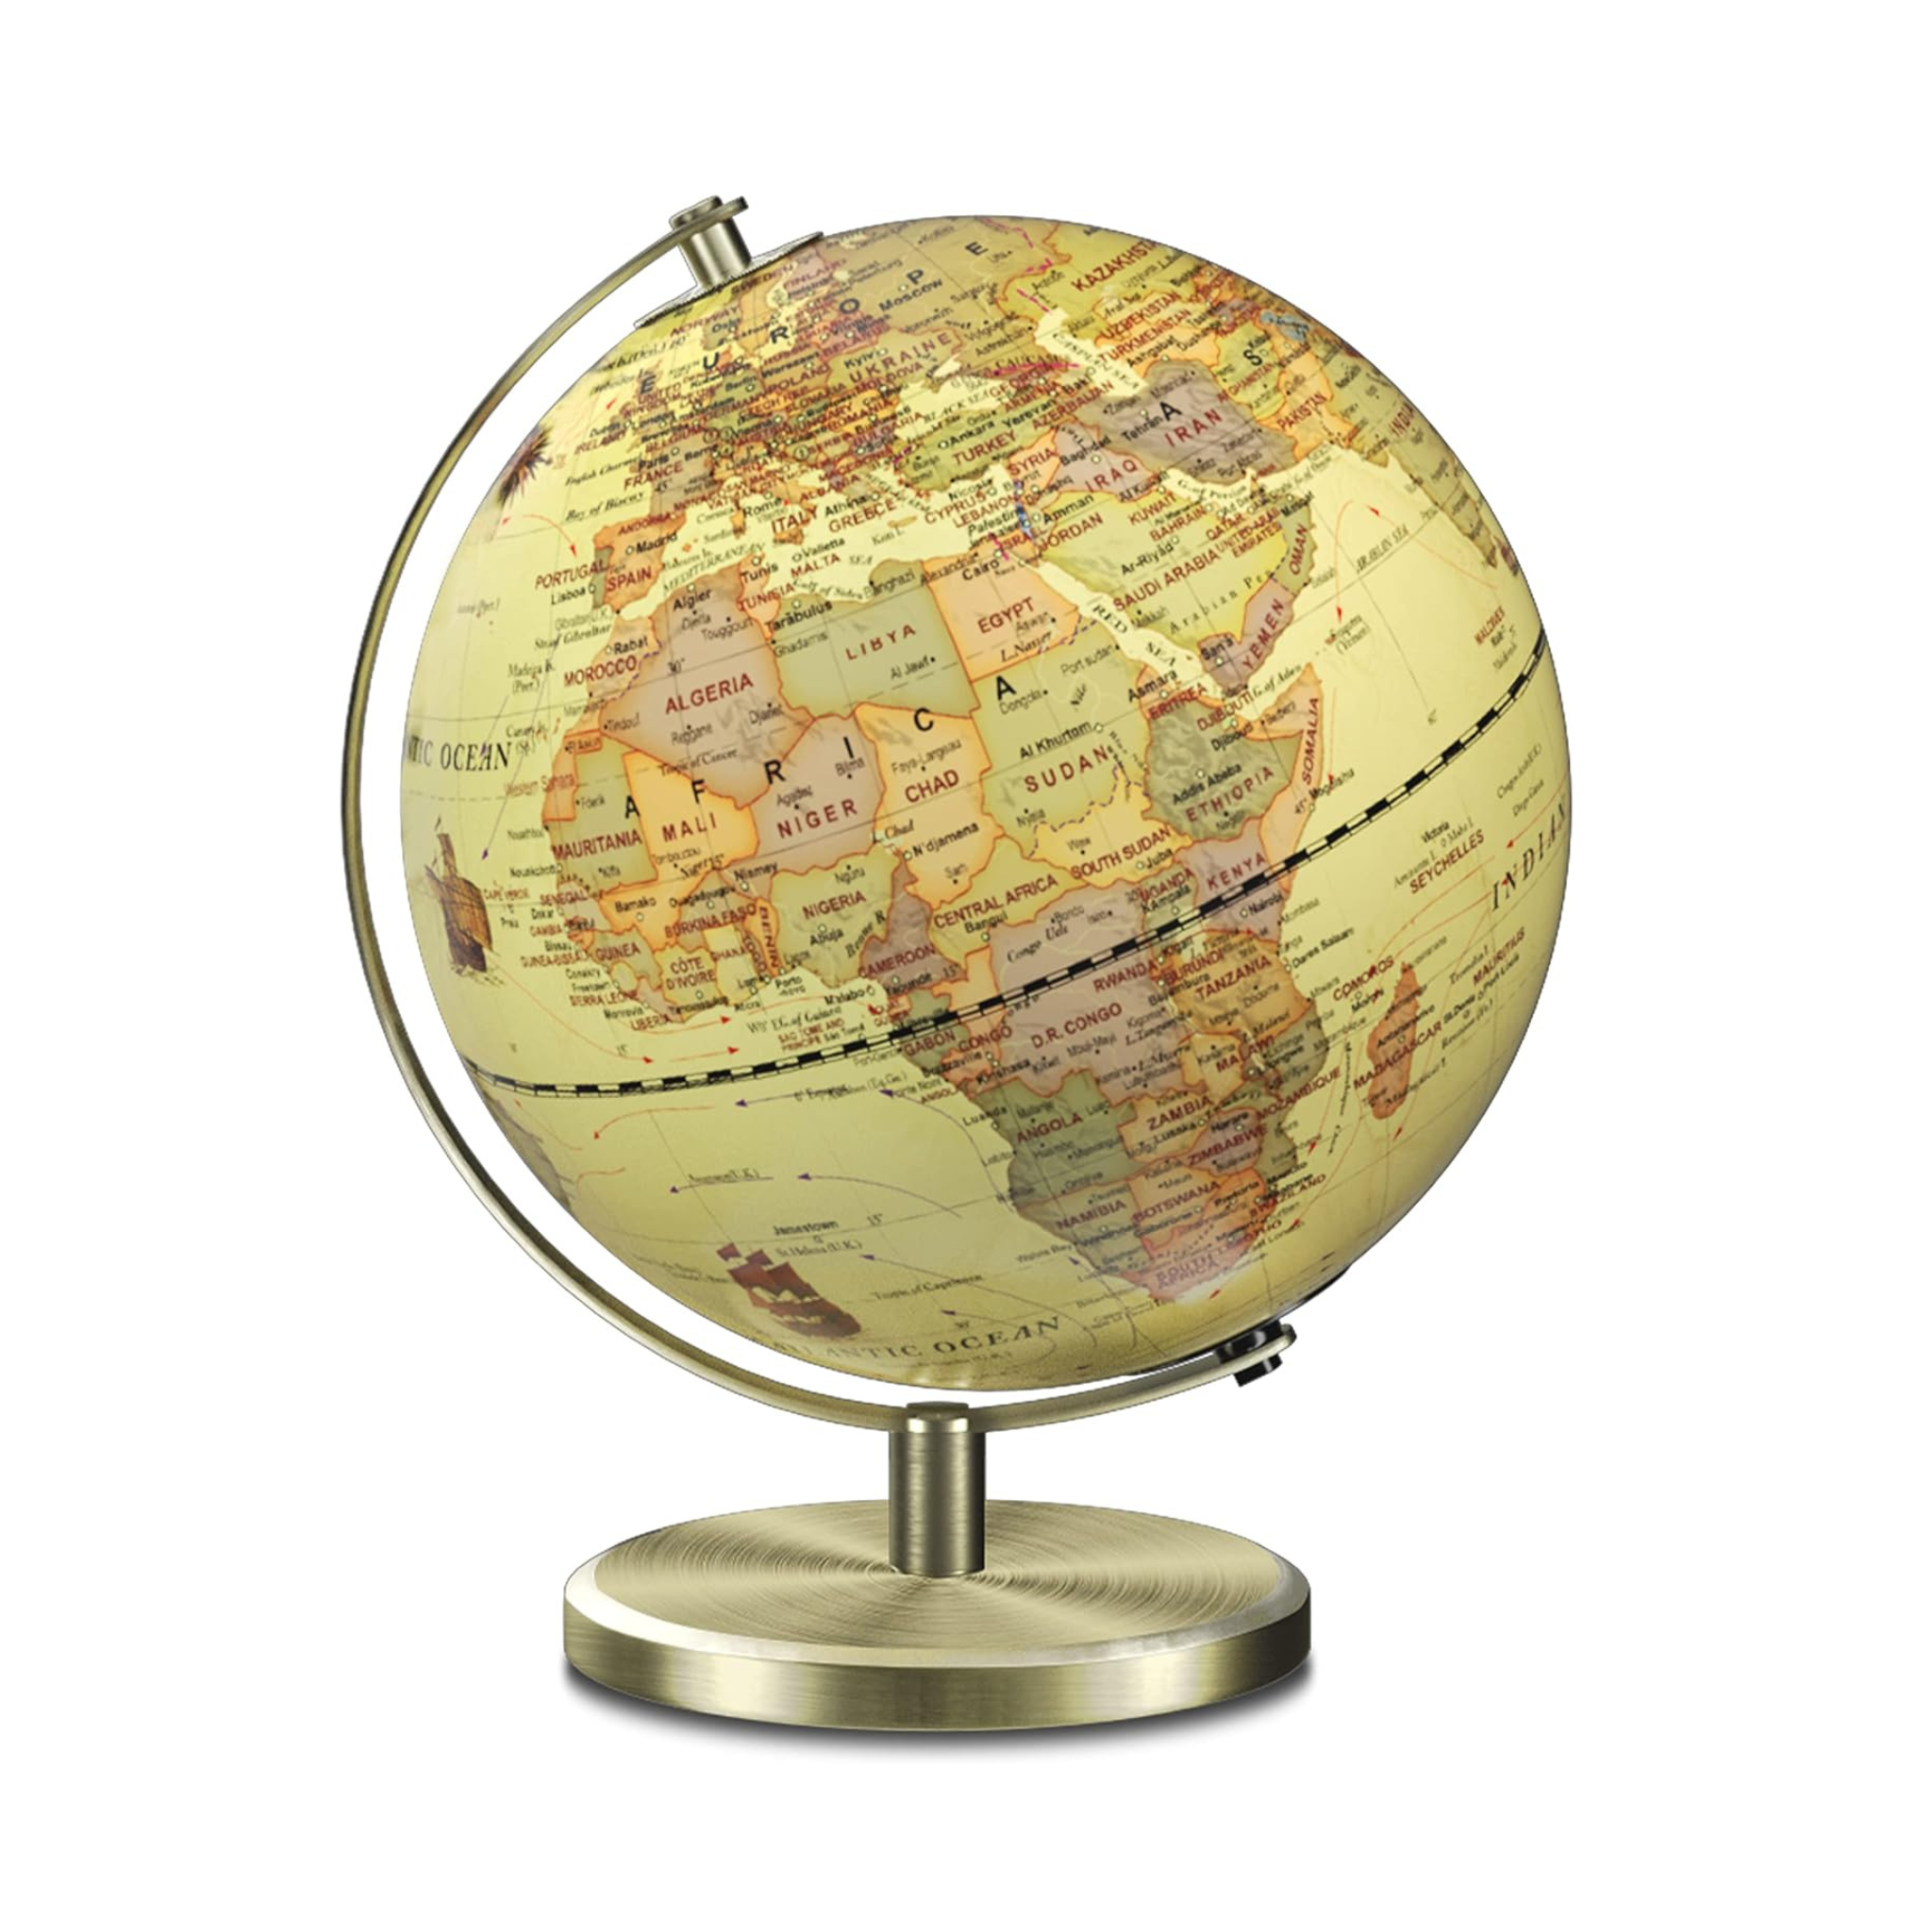 Waldauge 9" Illuminated World Globe with Stand